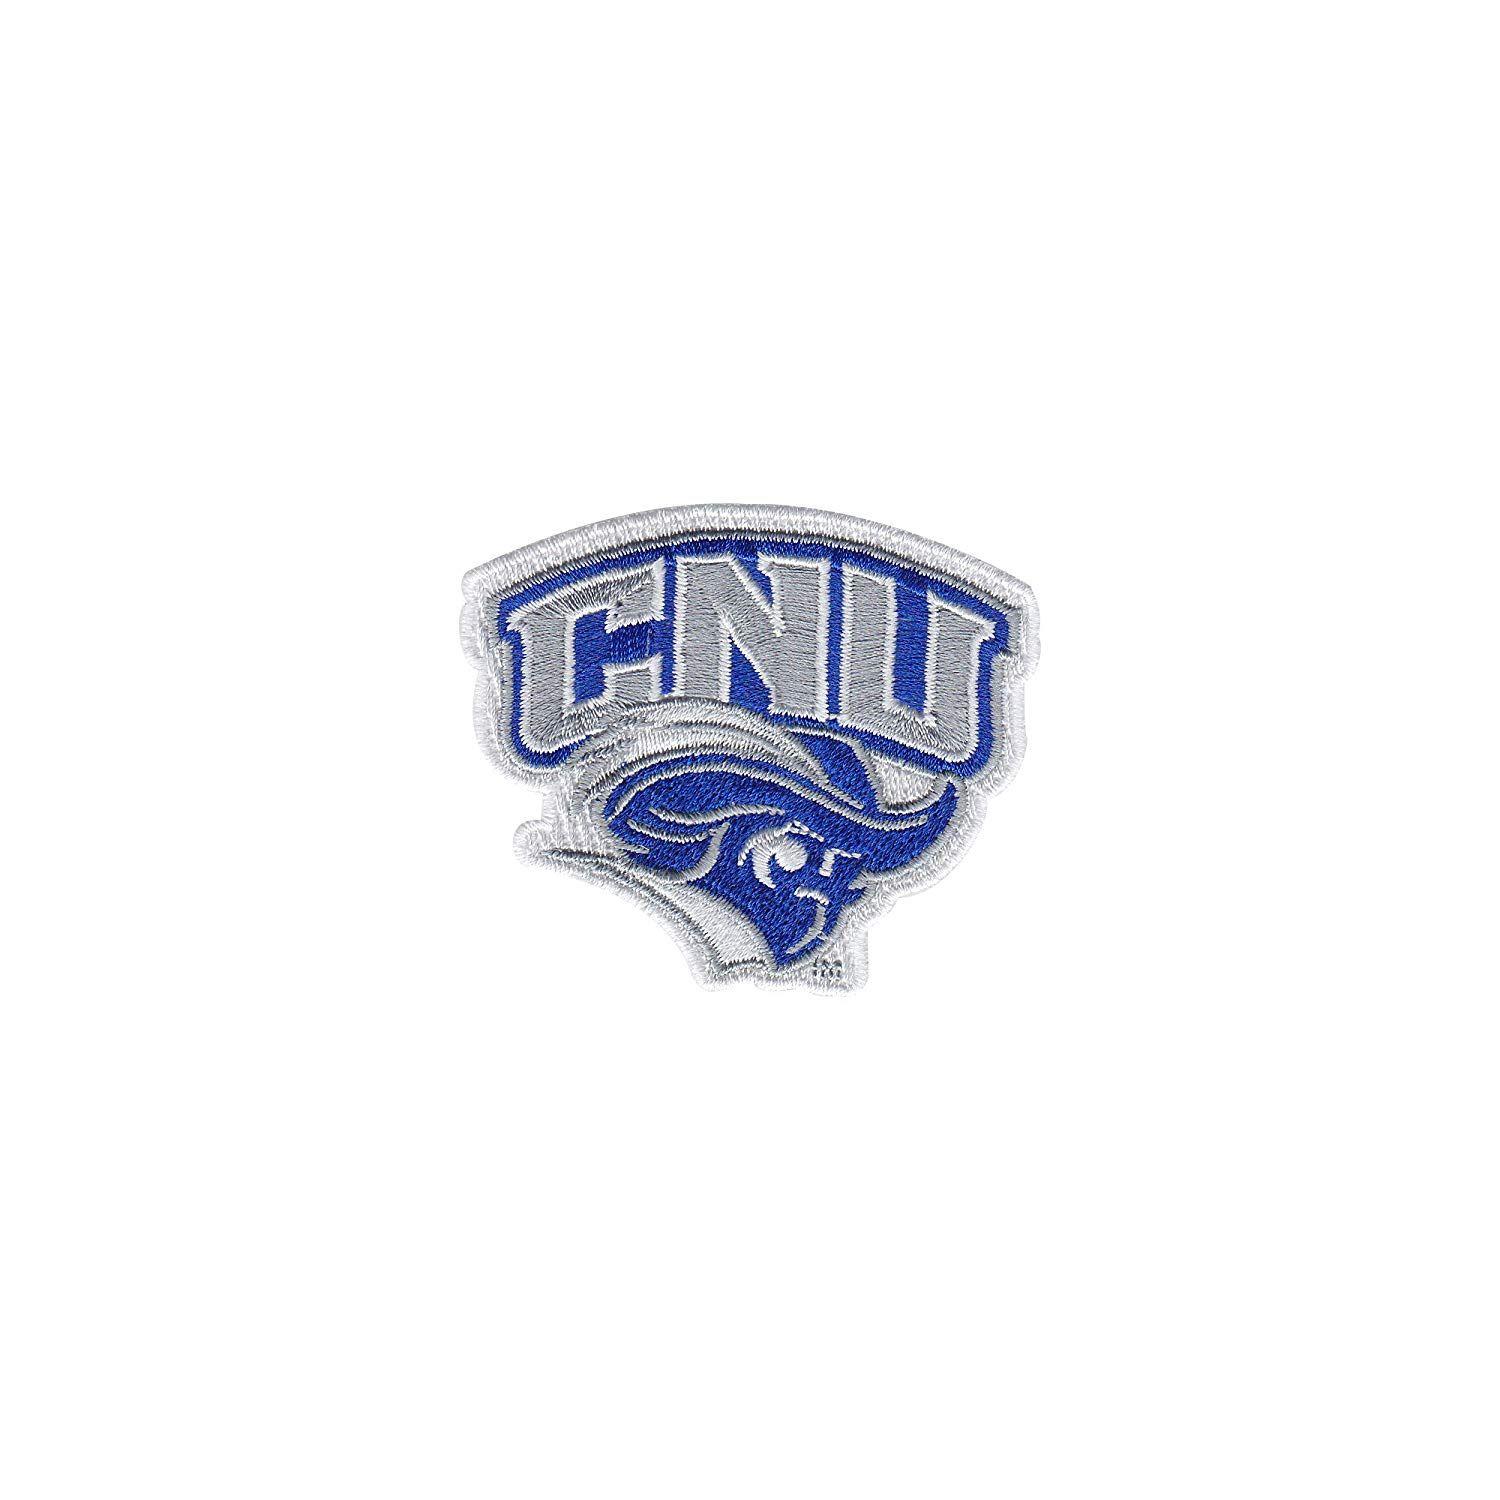 CNU Logo - Amazon.com: Tervis 1098175 CNU Captains Logo Tumbler with Emblem and ...